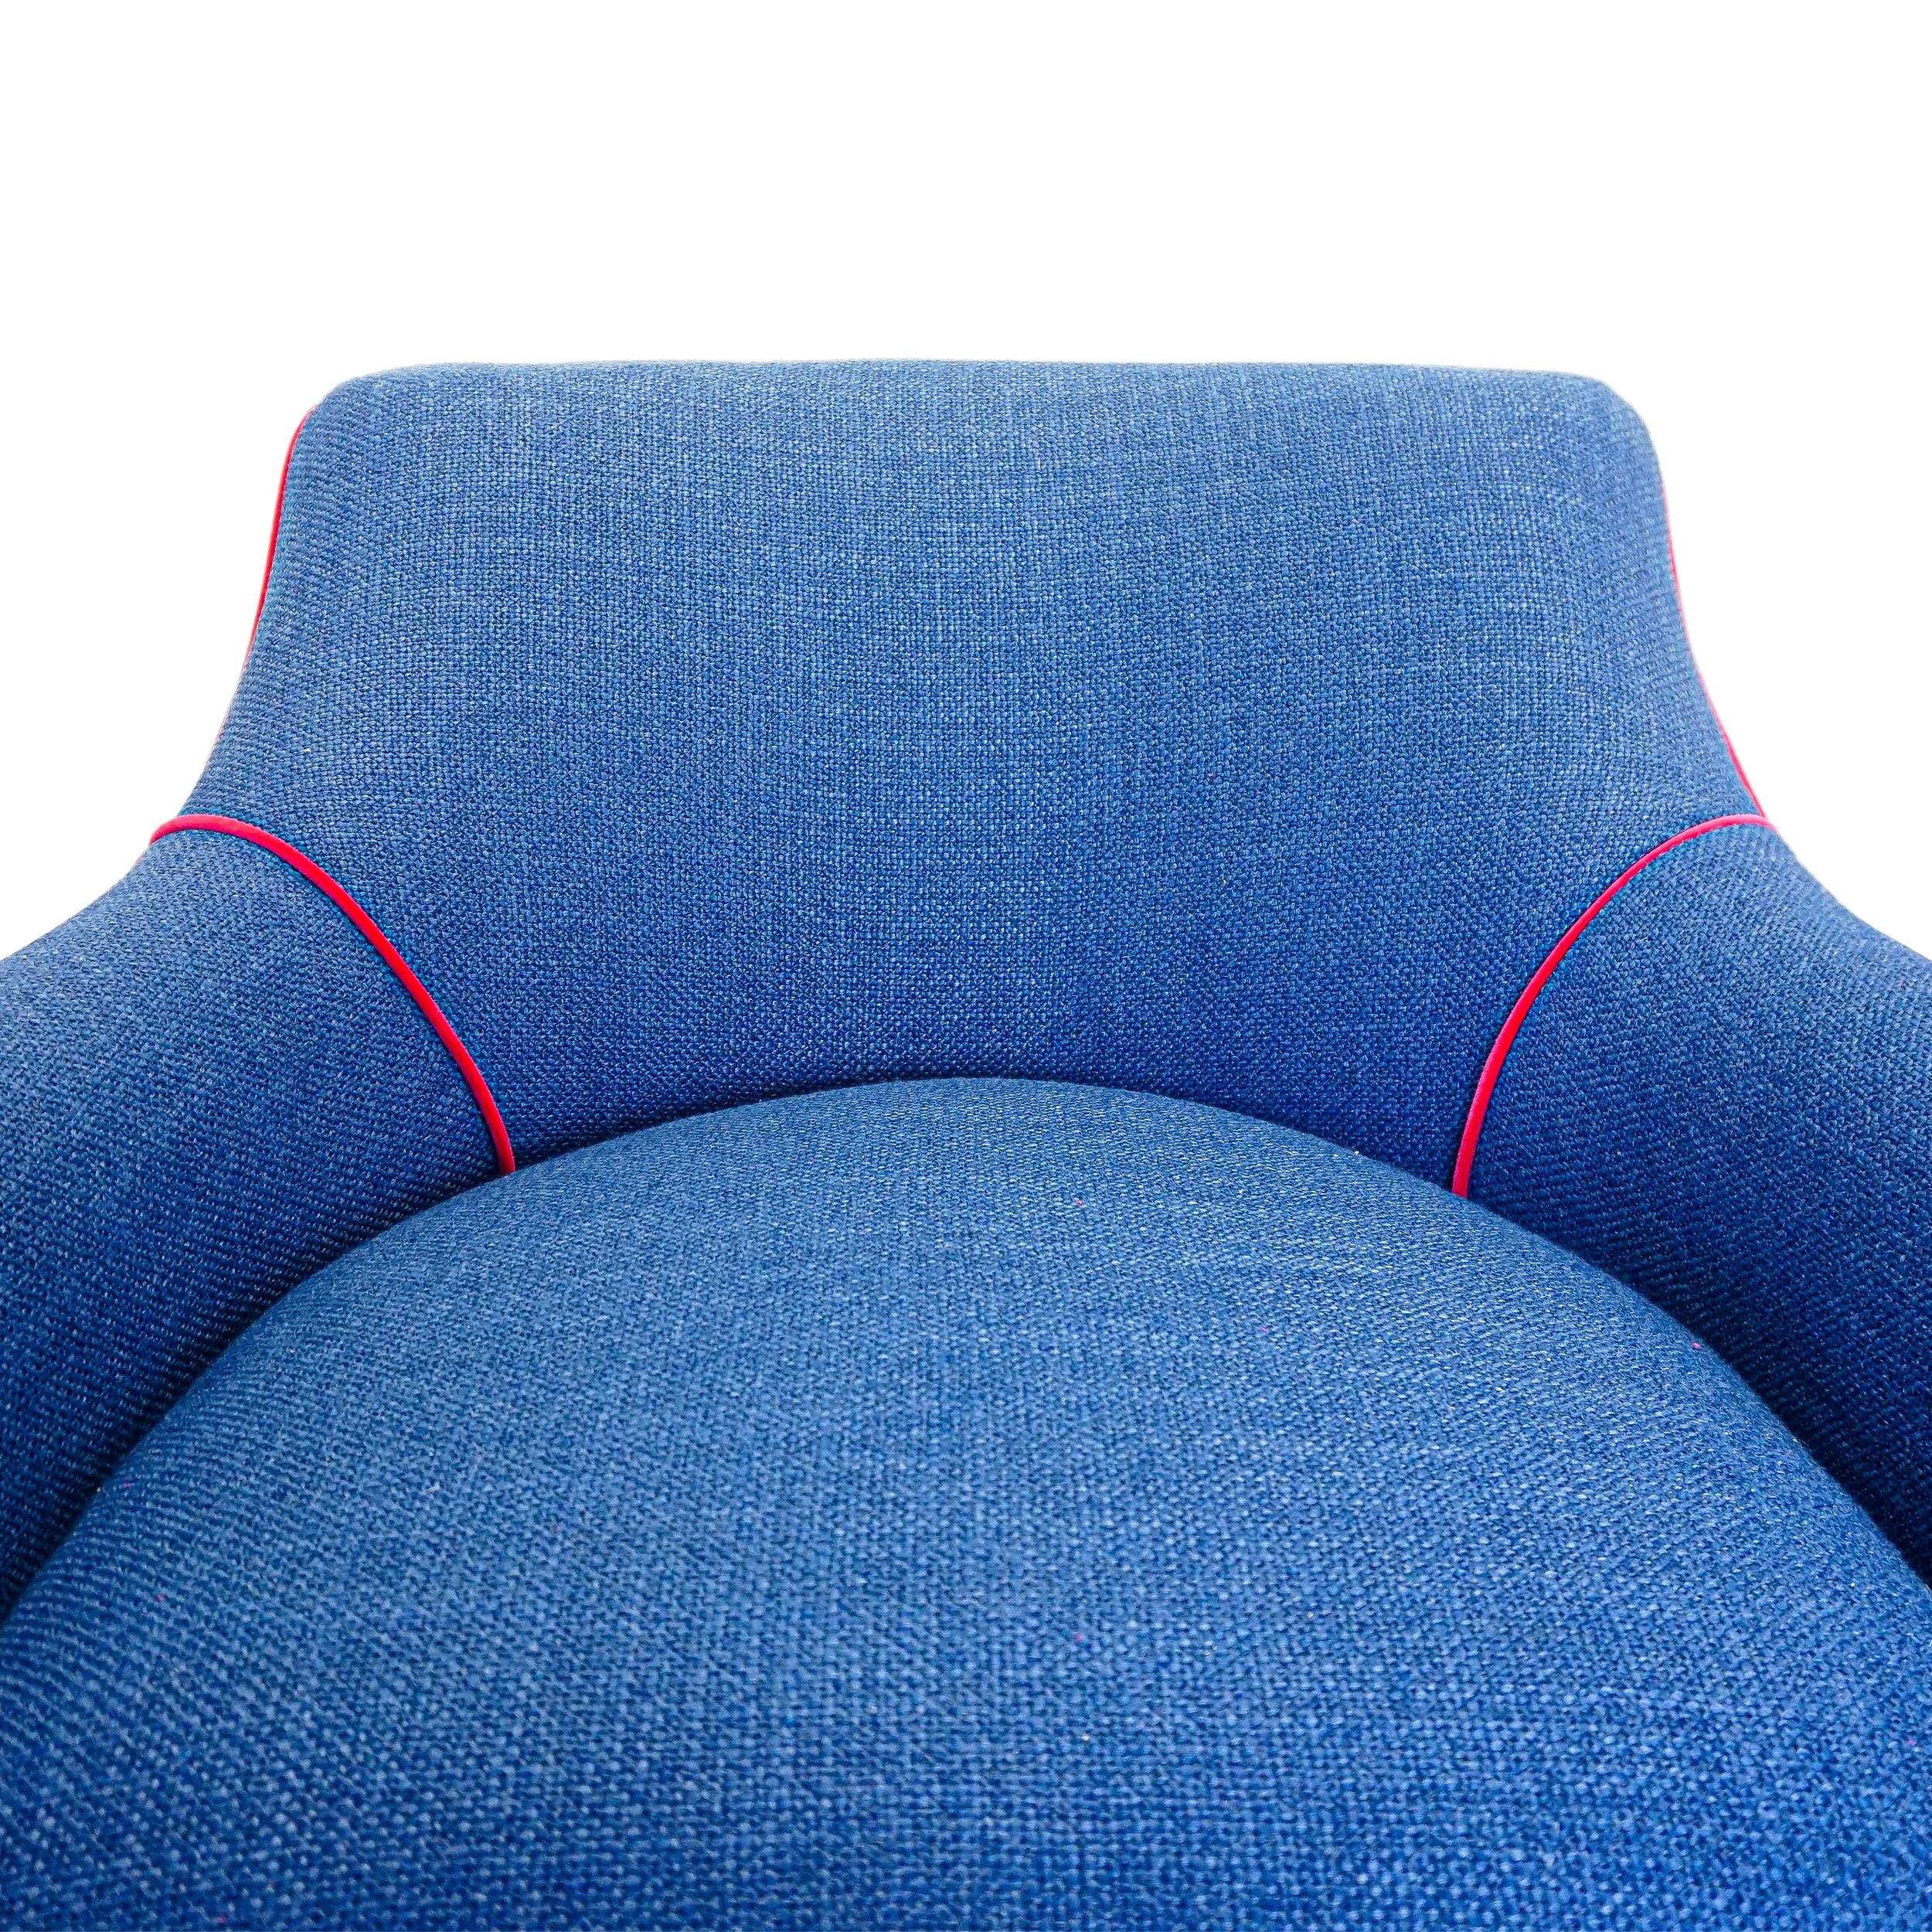 Modern Swivel Chair in Blue Woven and Fuchsia Velvet Accent Welting For Sale 5